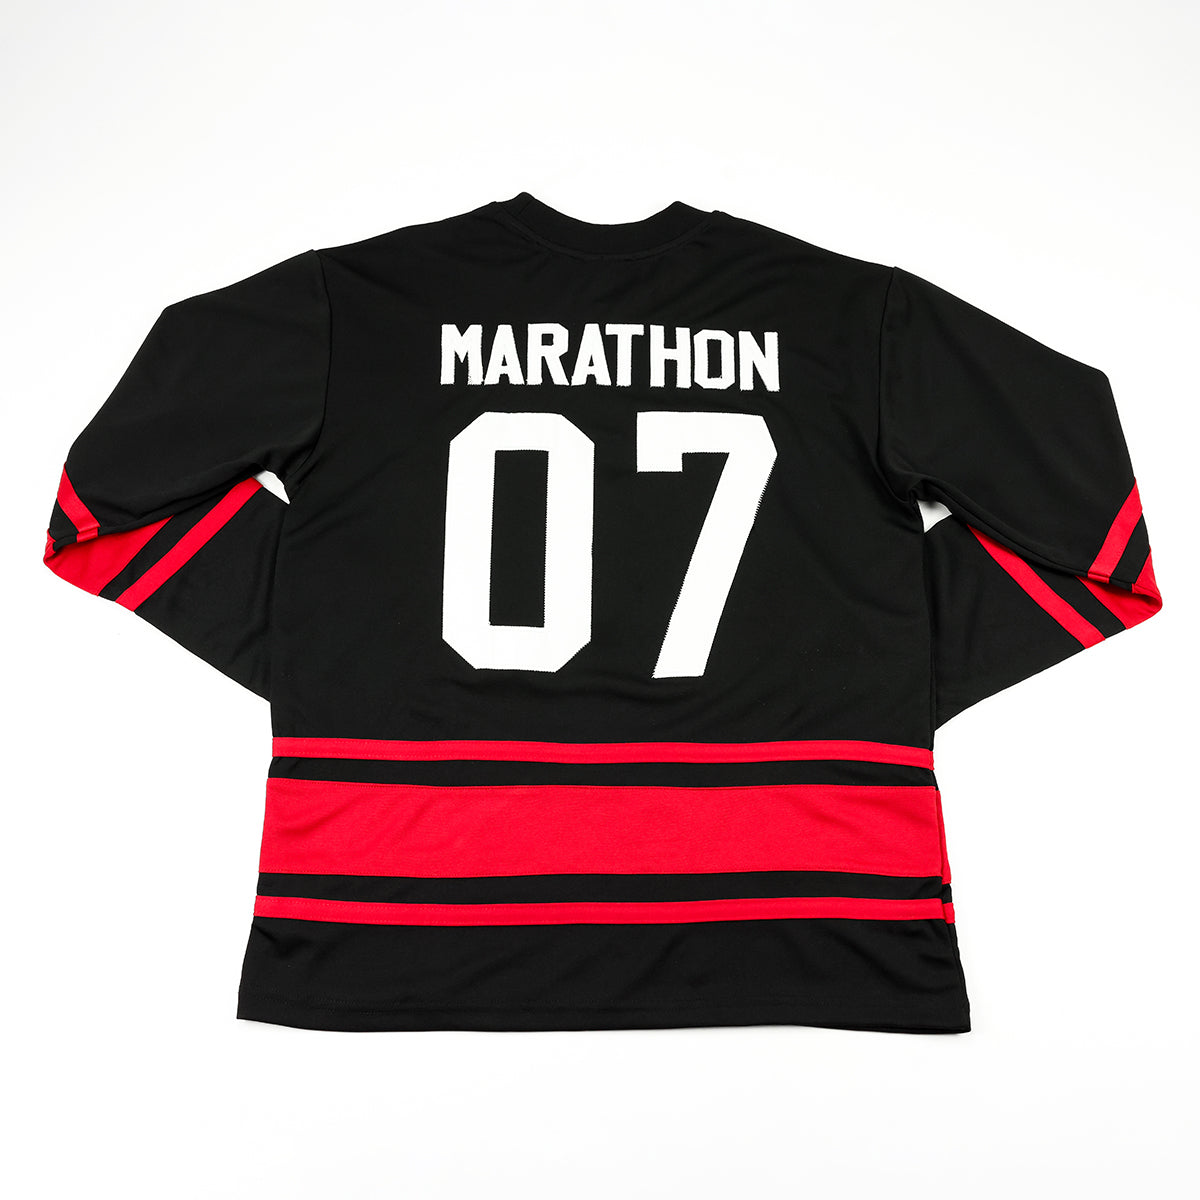 Crenshaw Hockey Jersey - Black/Red - Back